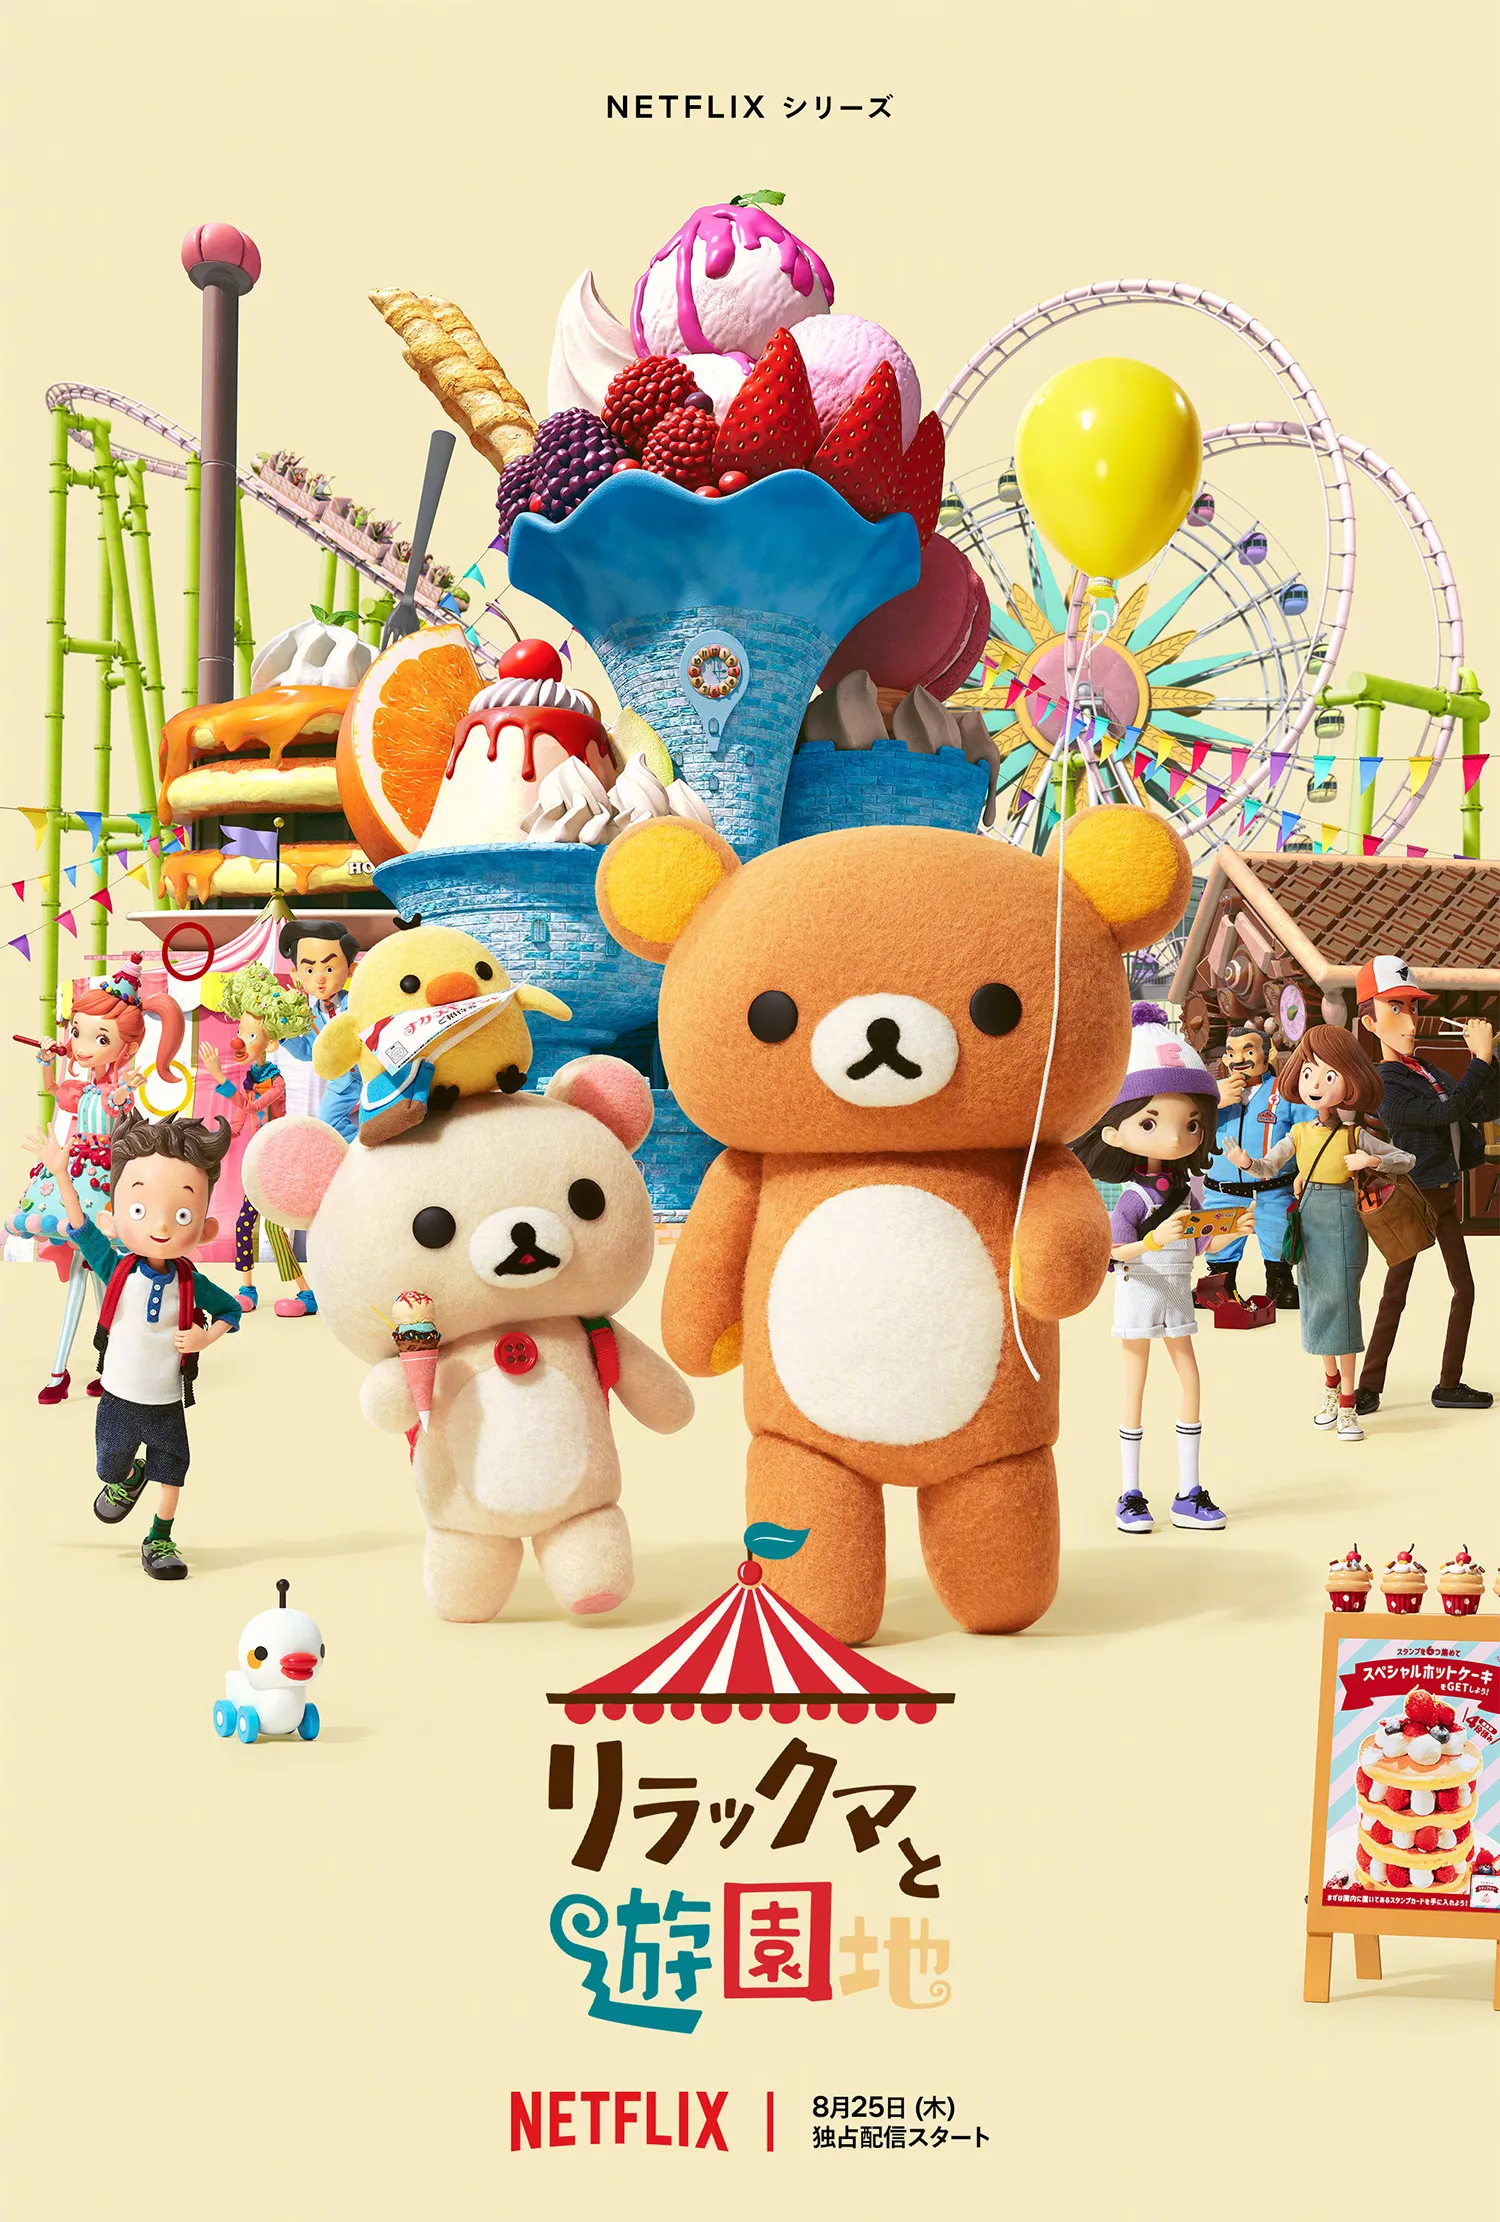 Netflix's stop-motion animation 'Rilakkuma's Theme Park Adventure' releases official trailer, going live on August 25 | FMV6